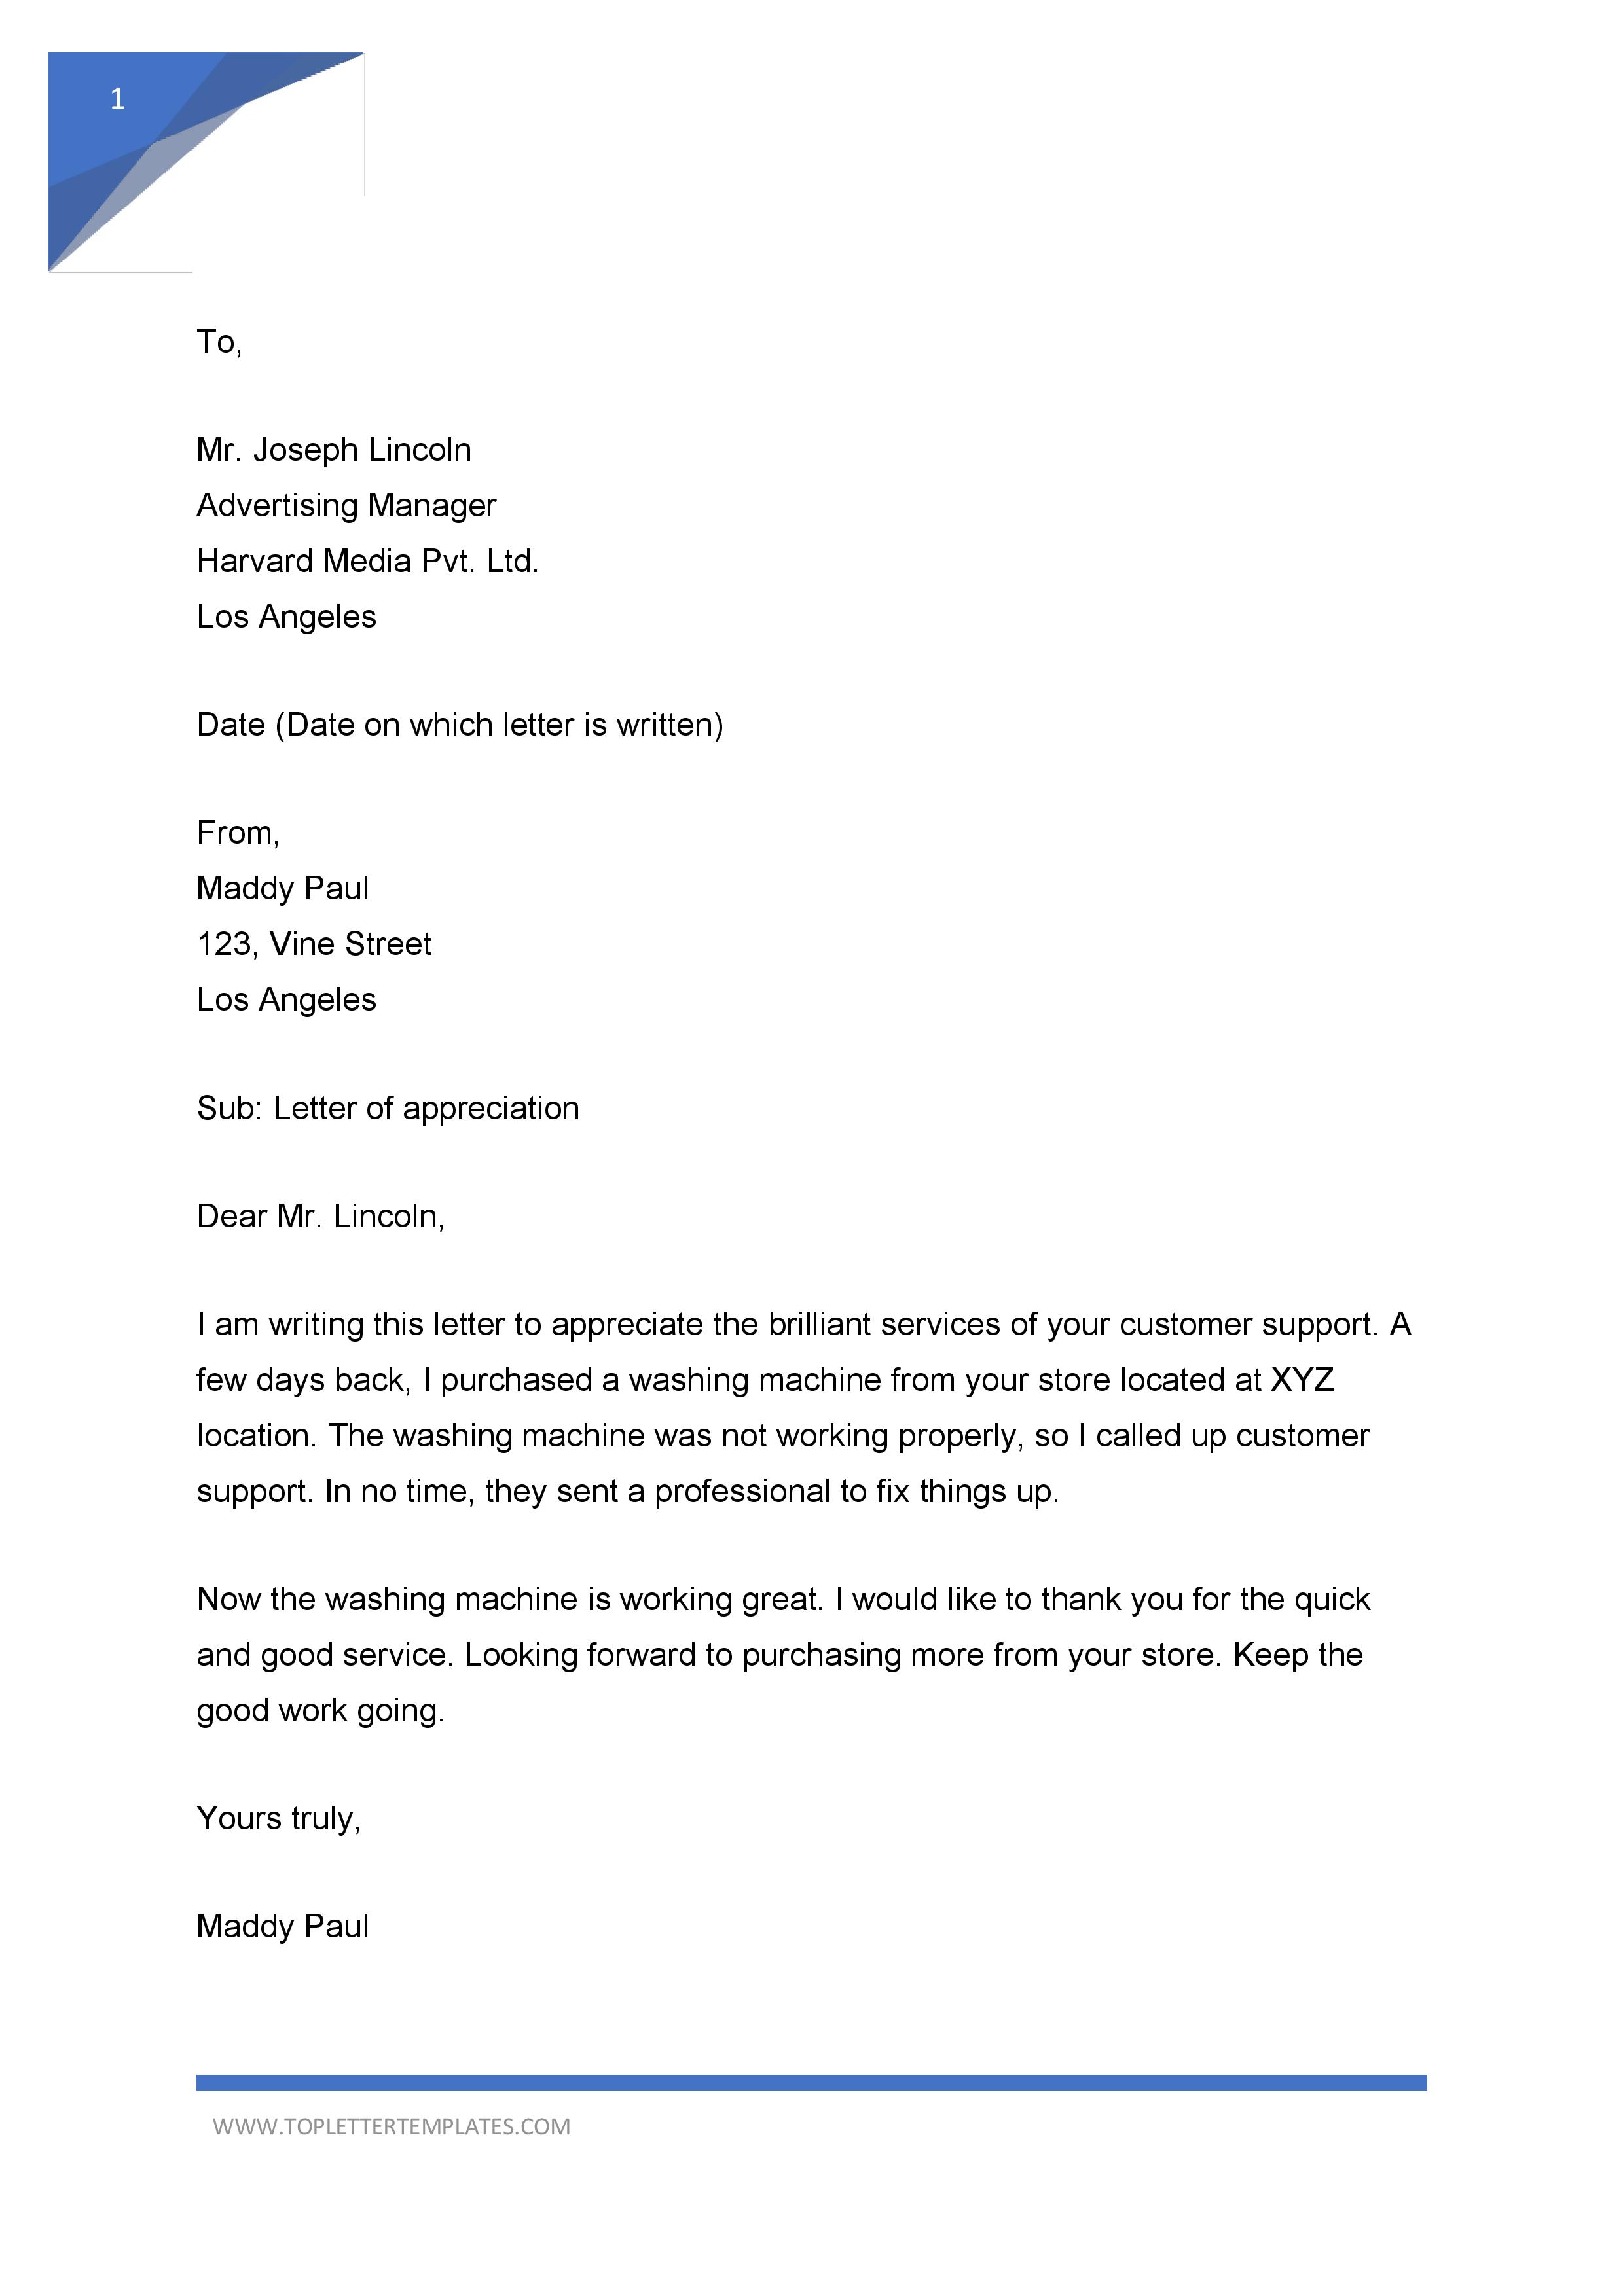 Formal Letter Of Appreciation from toplettertemplates.com